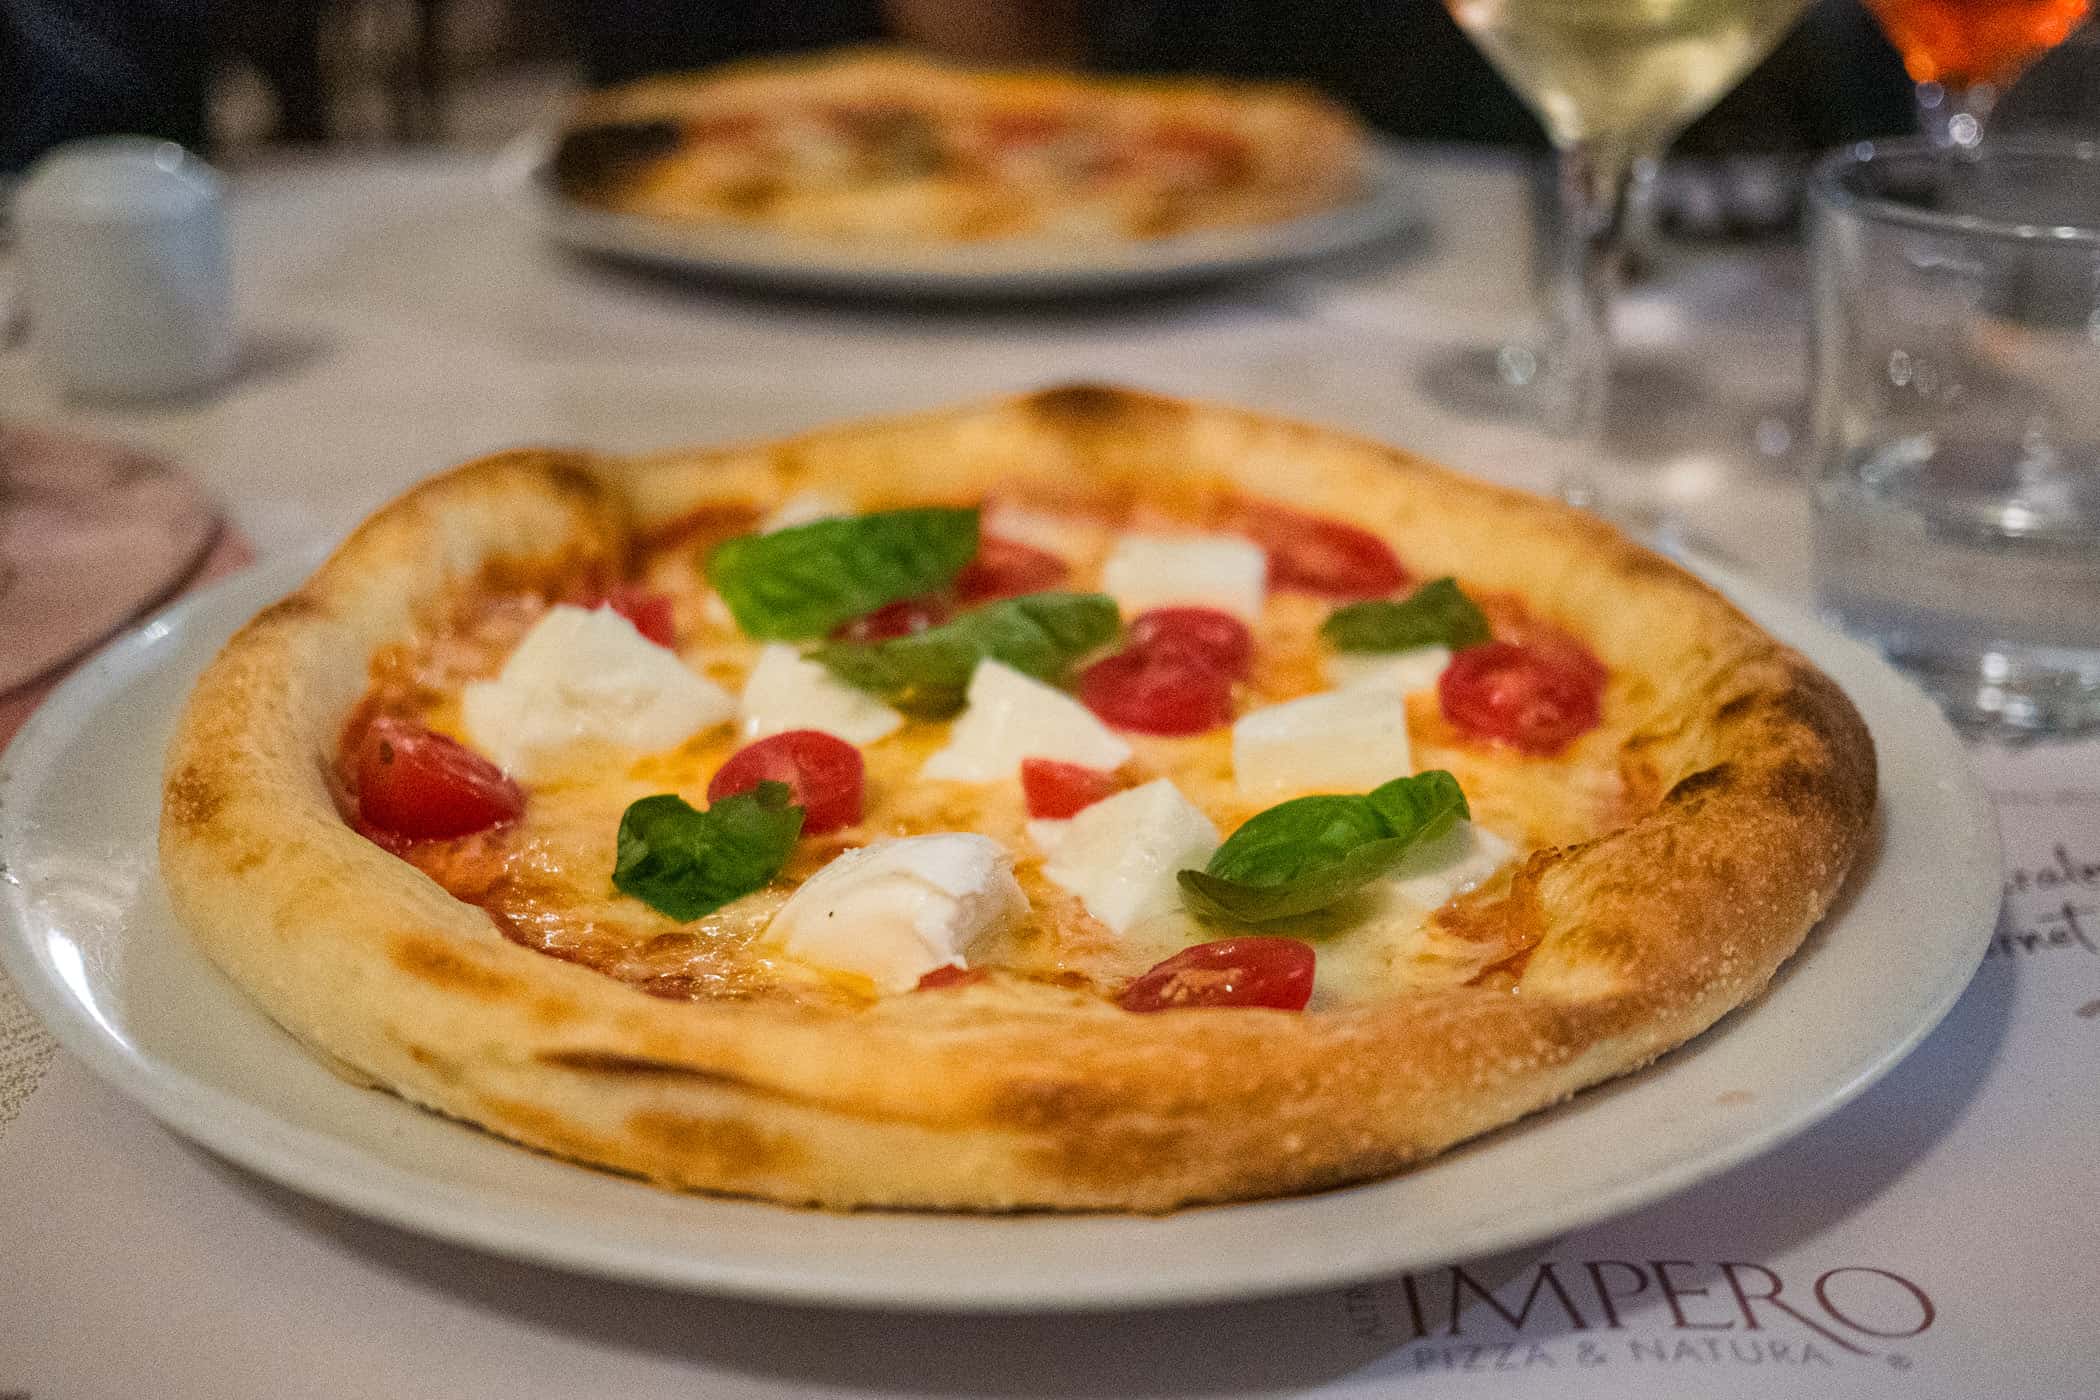 impero pizza - konzepte, gastronomie, food-nomyblog Pizza mit Teig aus lievito madre: Impero Pizza, Verona